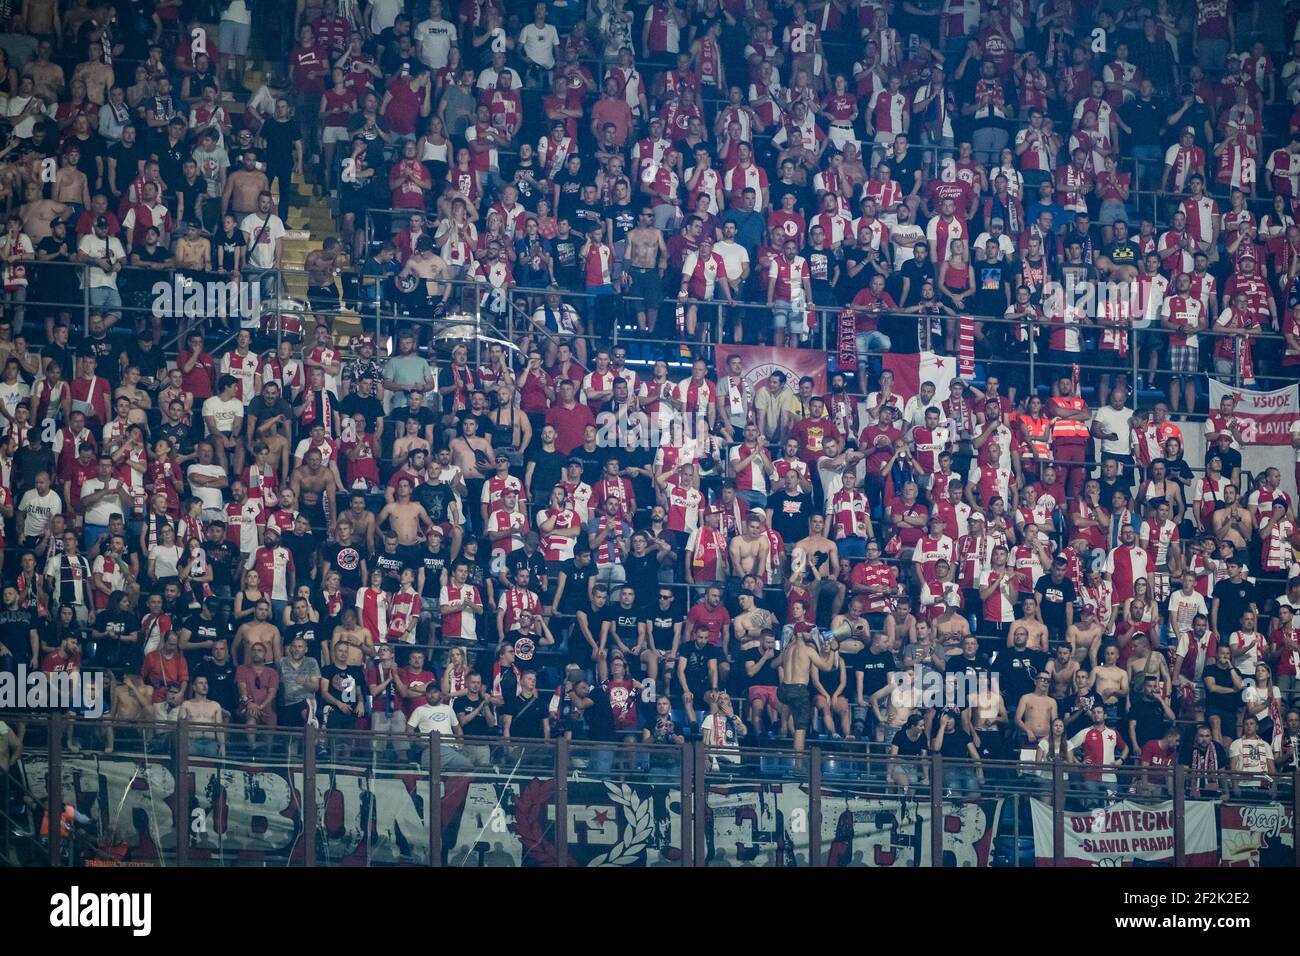 Biggest Prague Derby Attendances » SK Slavia Praha